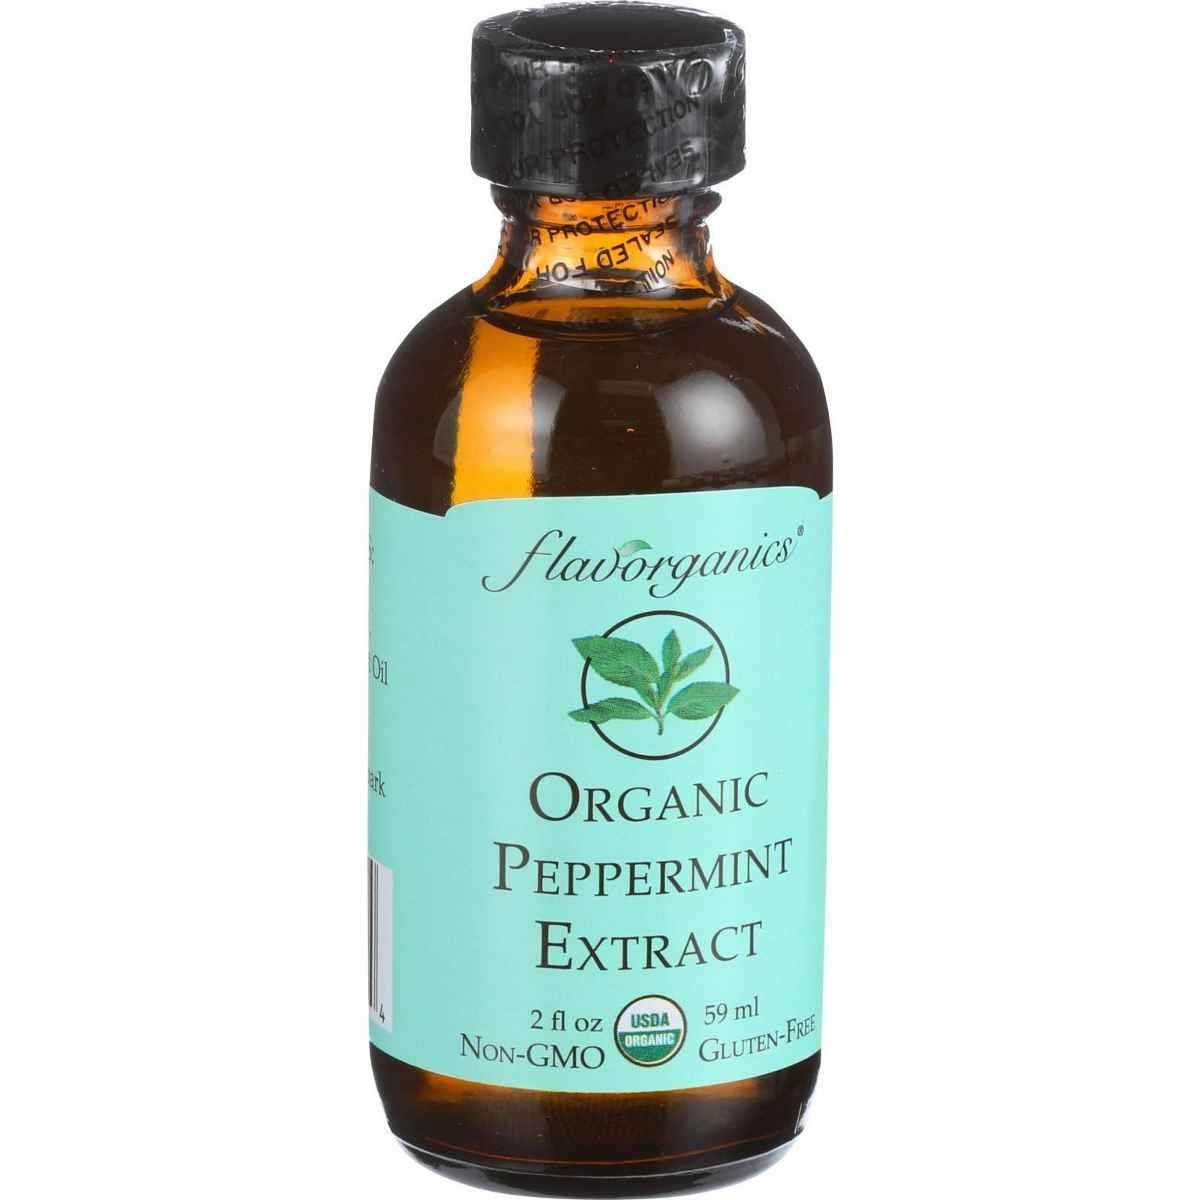 Flavorganics - Organic Peppermint Extract - [59ml]